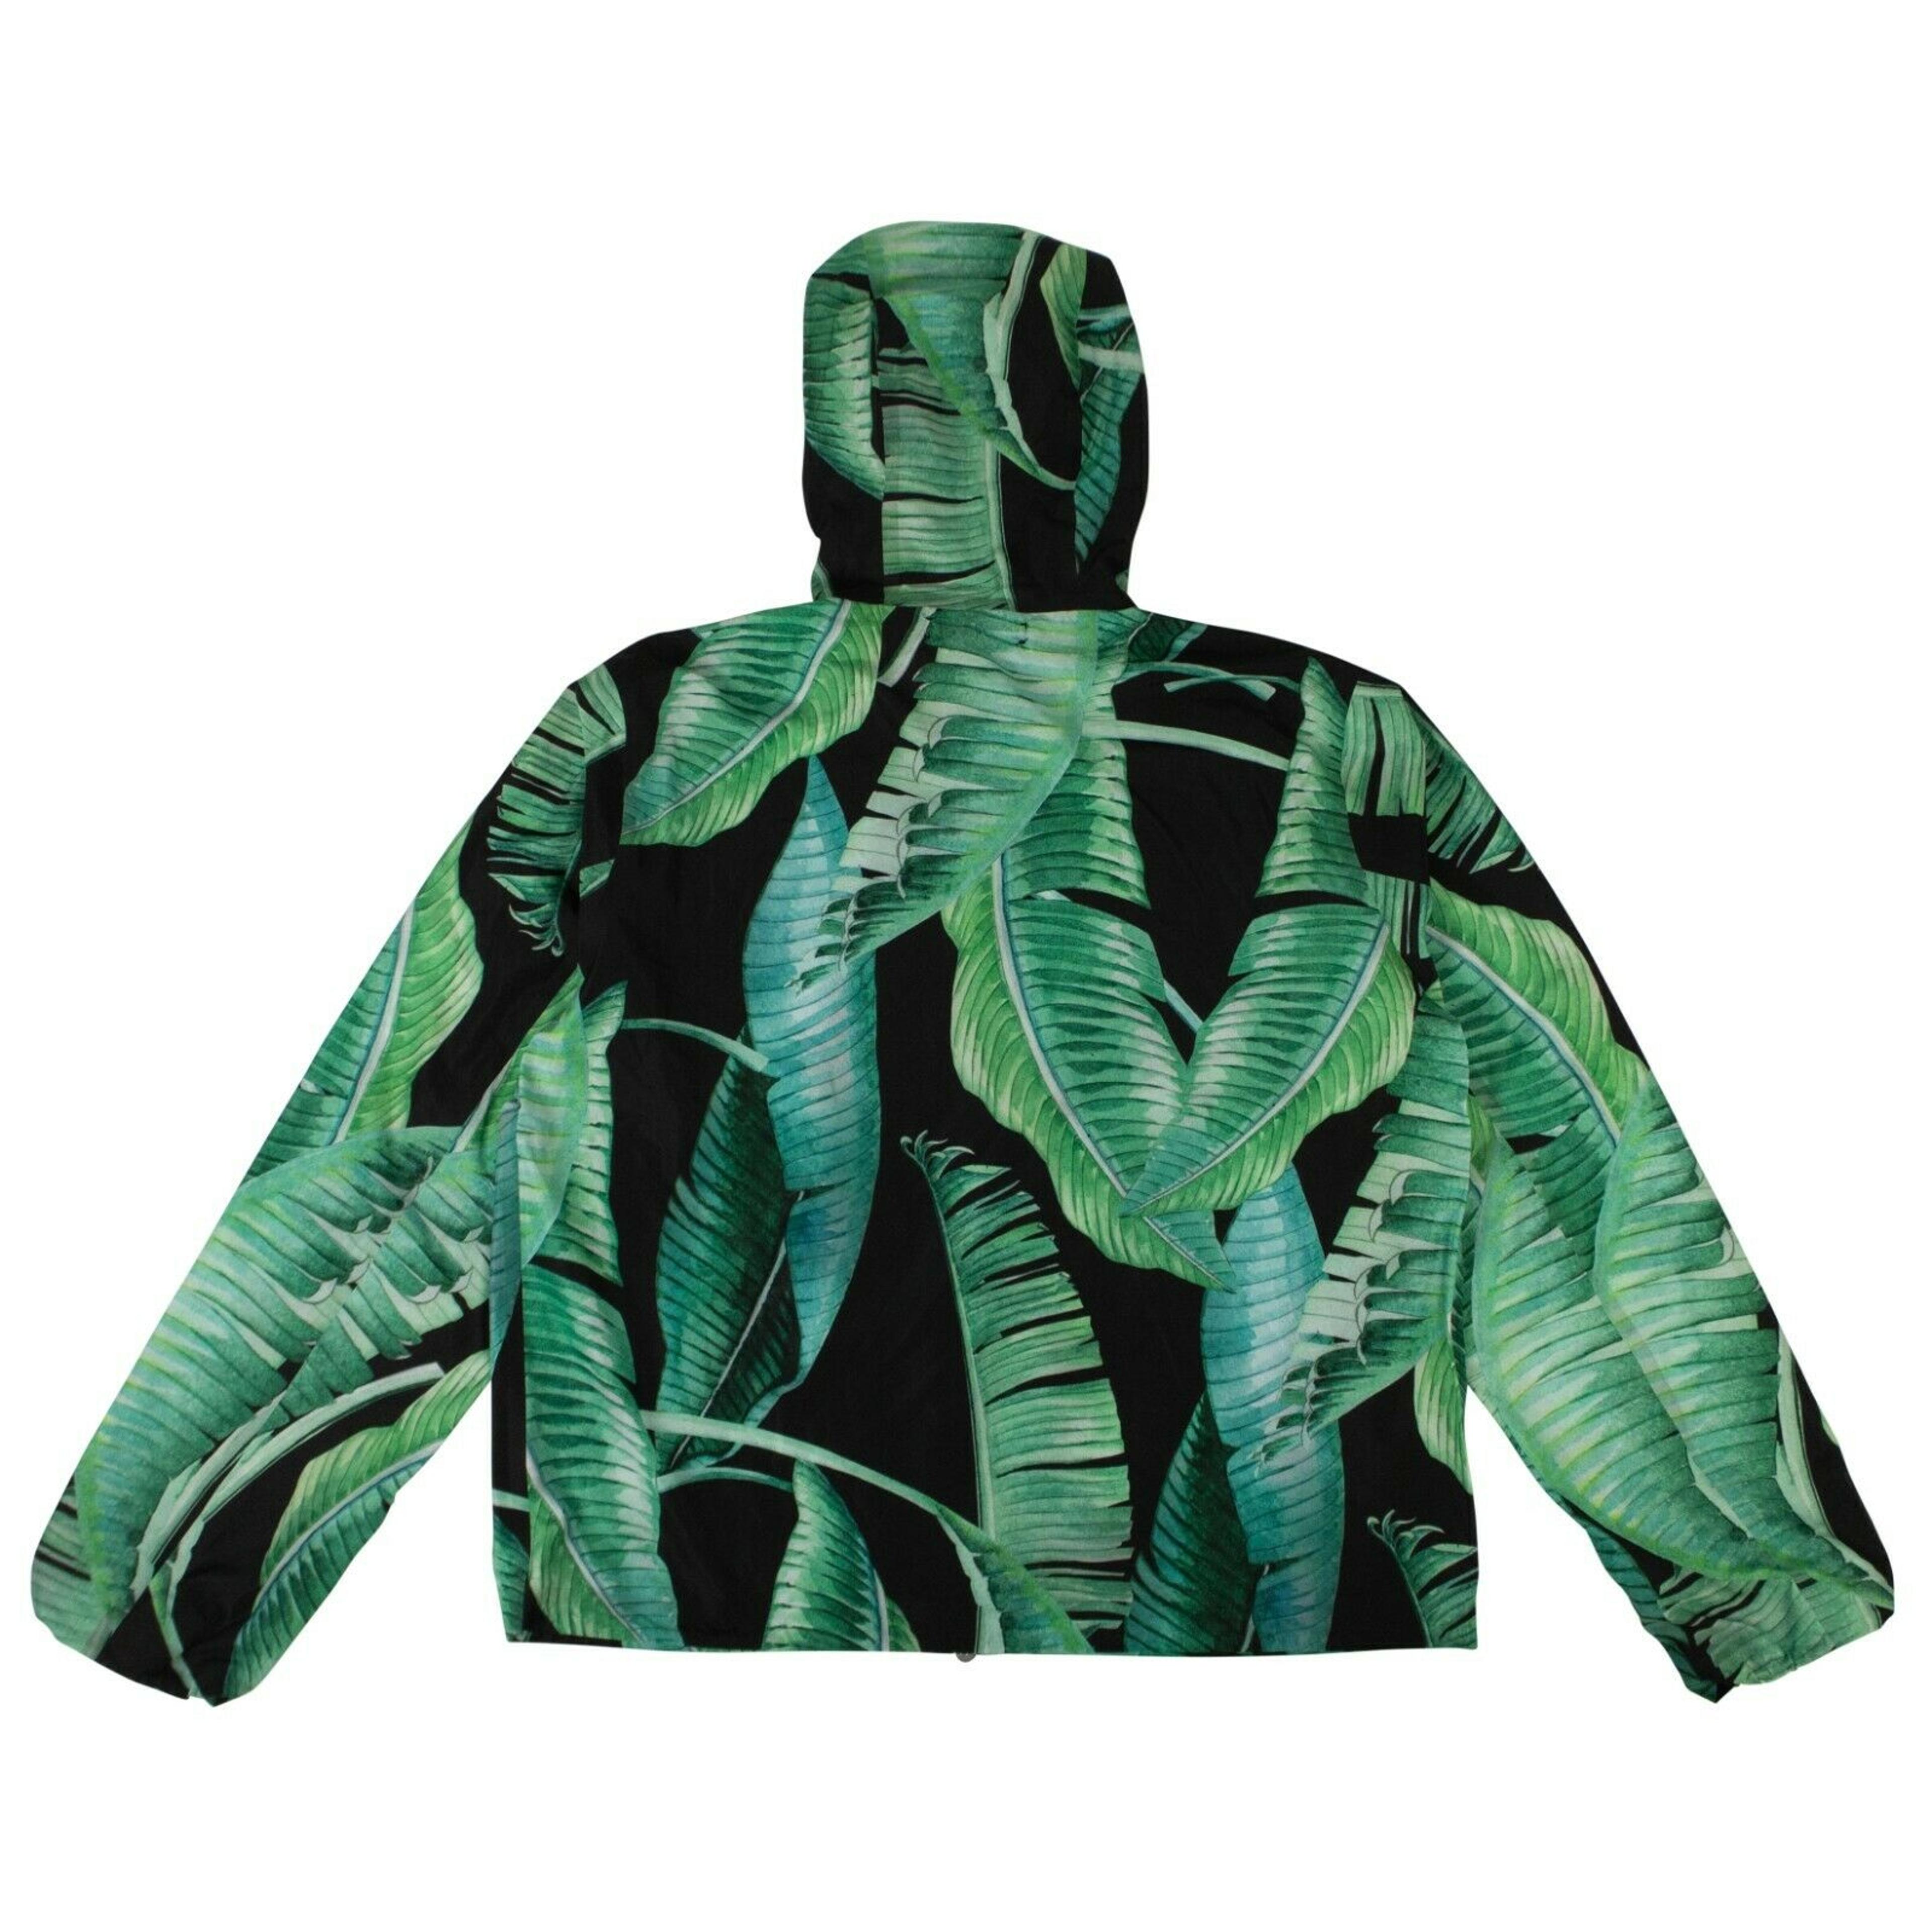 Alternate View 1 of Green And Black Nylon 'Banana Leaves' Hooded Jacket